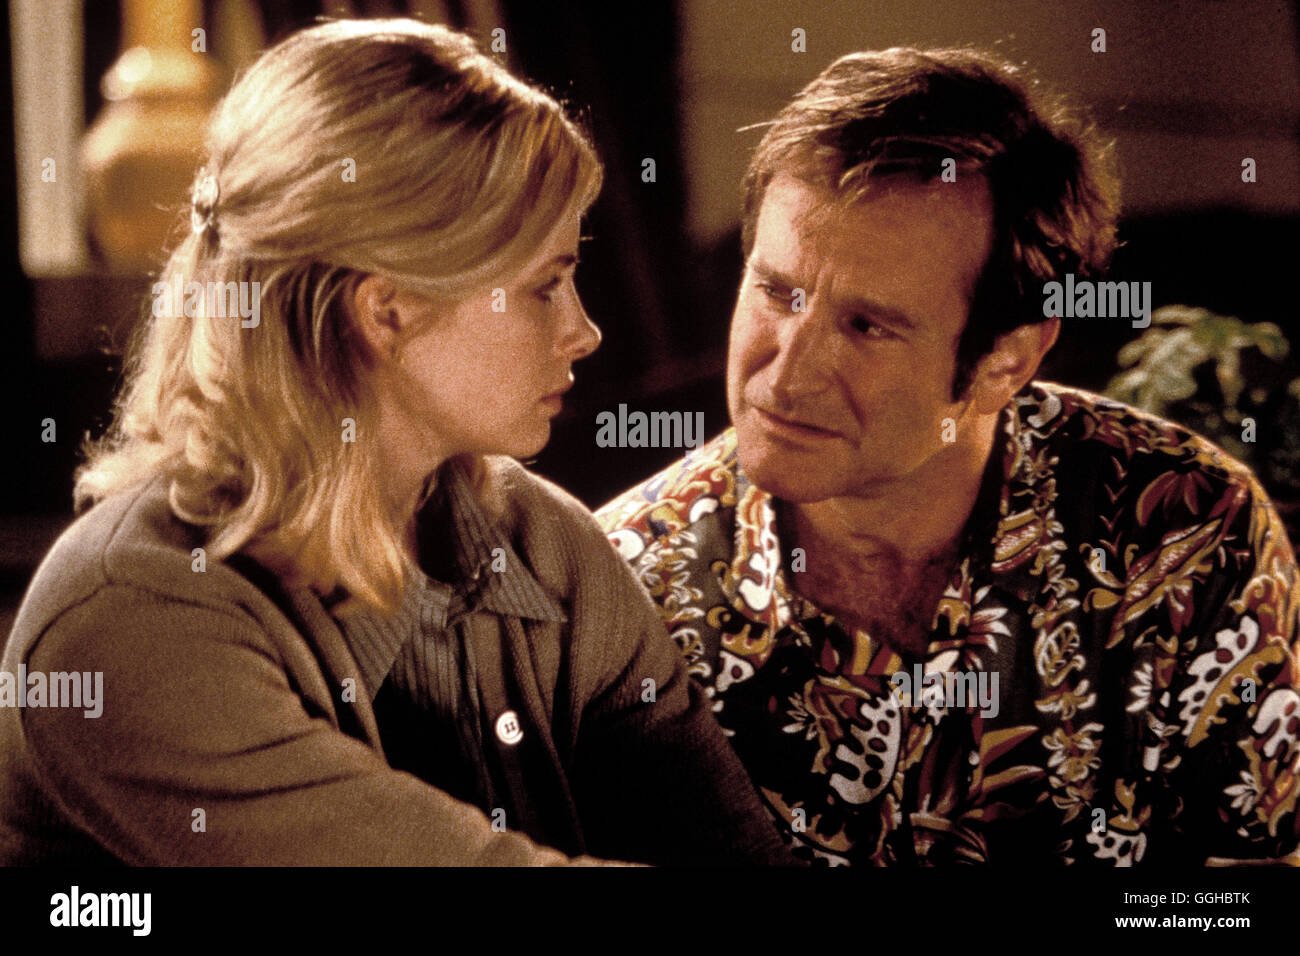 PATCH ADAMS Patch Adams / 1998 / EE.UU. Tom Shadyac Szene mit Monica Potter (Carin Fisher) und Robin Williams (Patch Adams). Regie: Tom Shadyac aka. Patch Adams Foto de stock